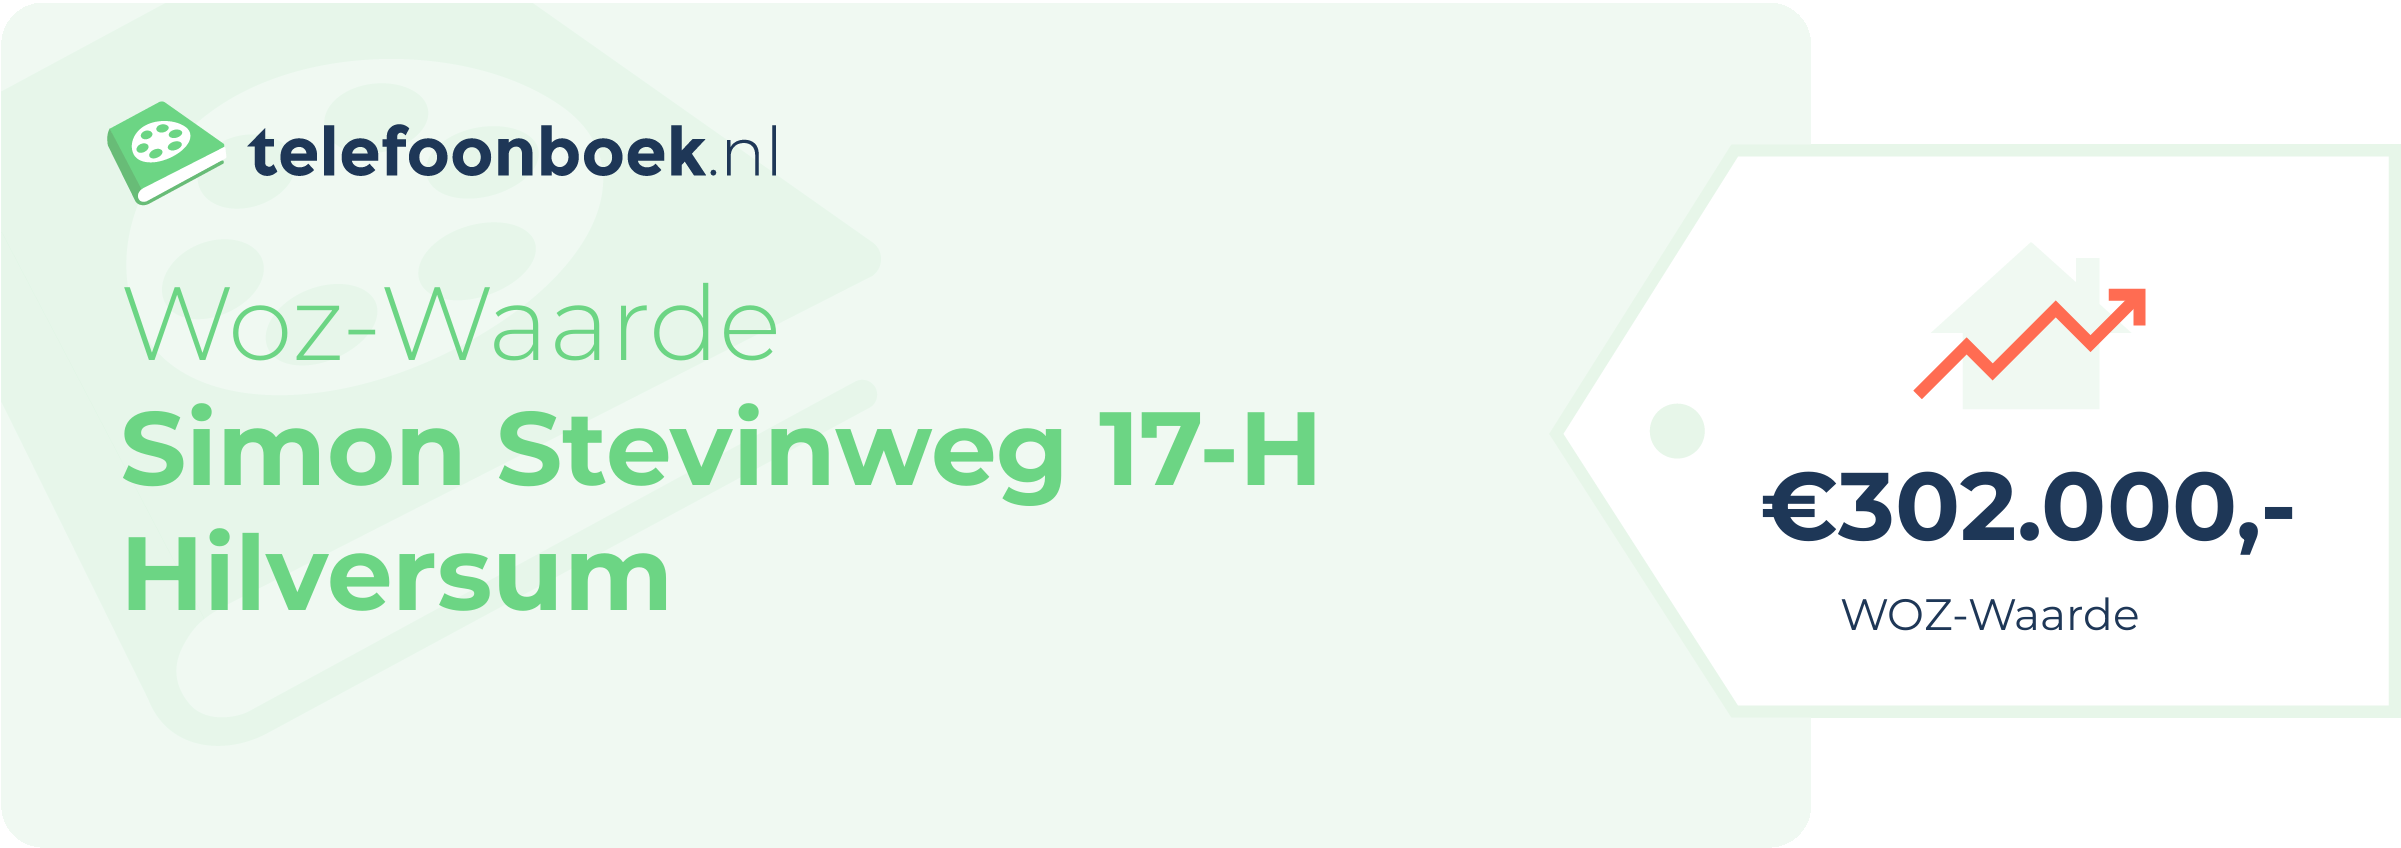 WOZ-waarde Simon Stevinweg 17-H Hilversum